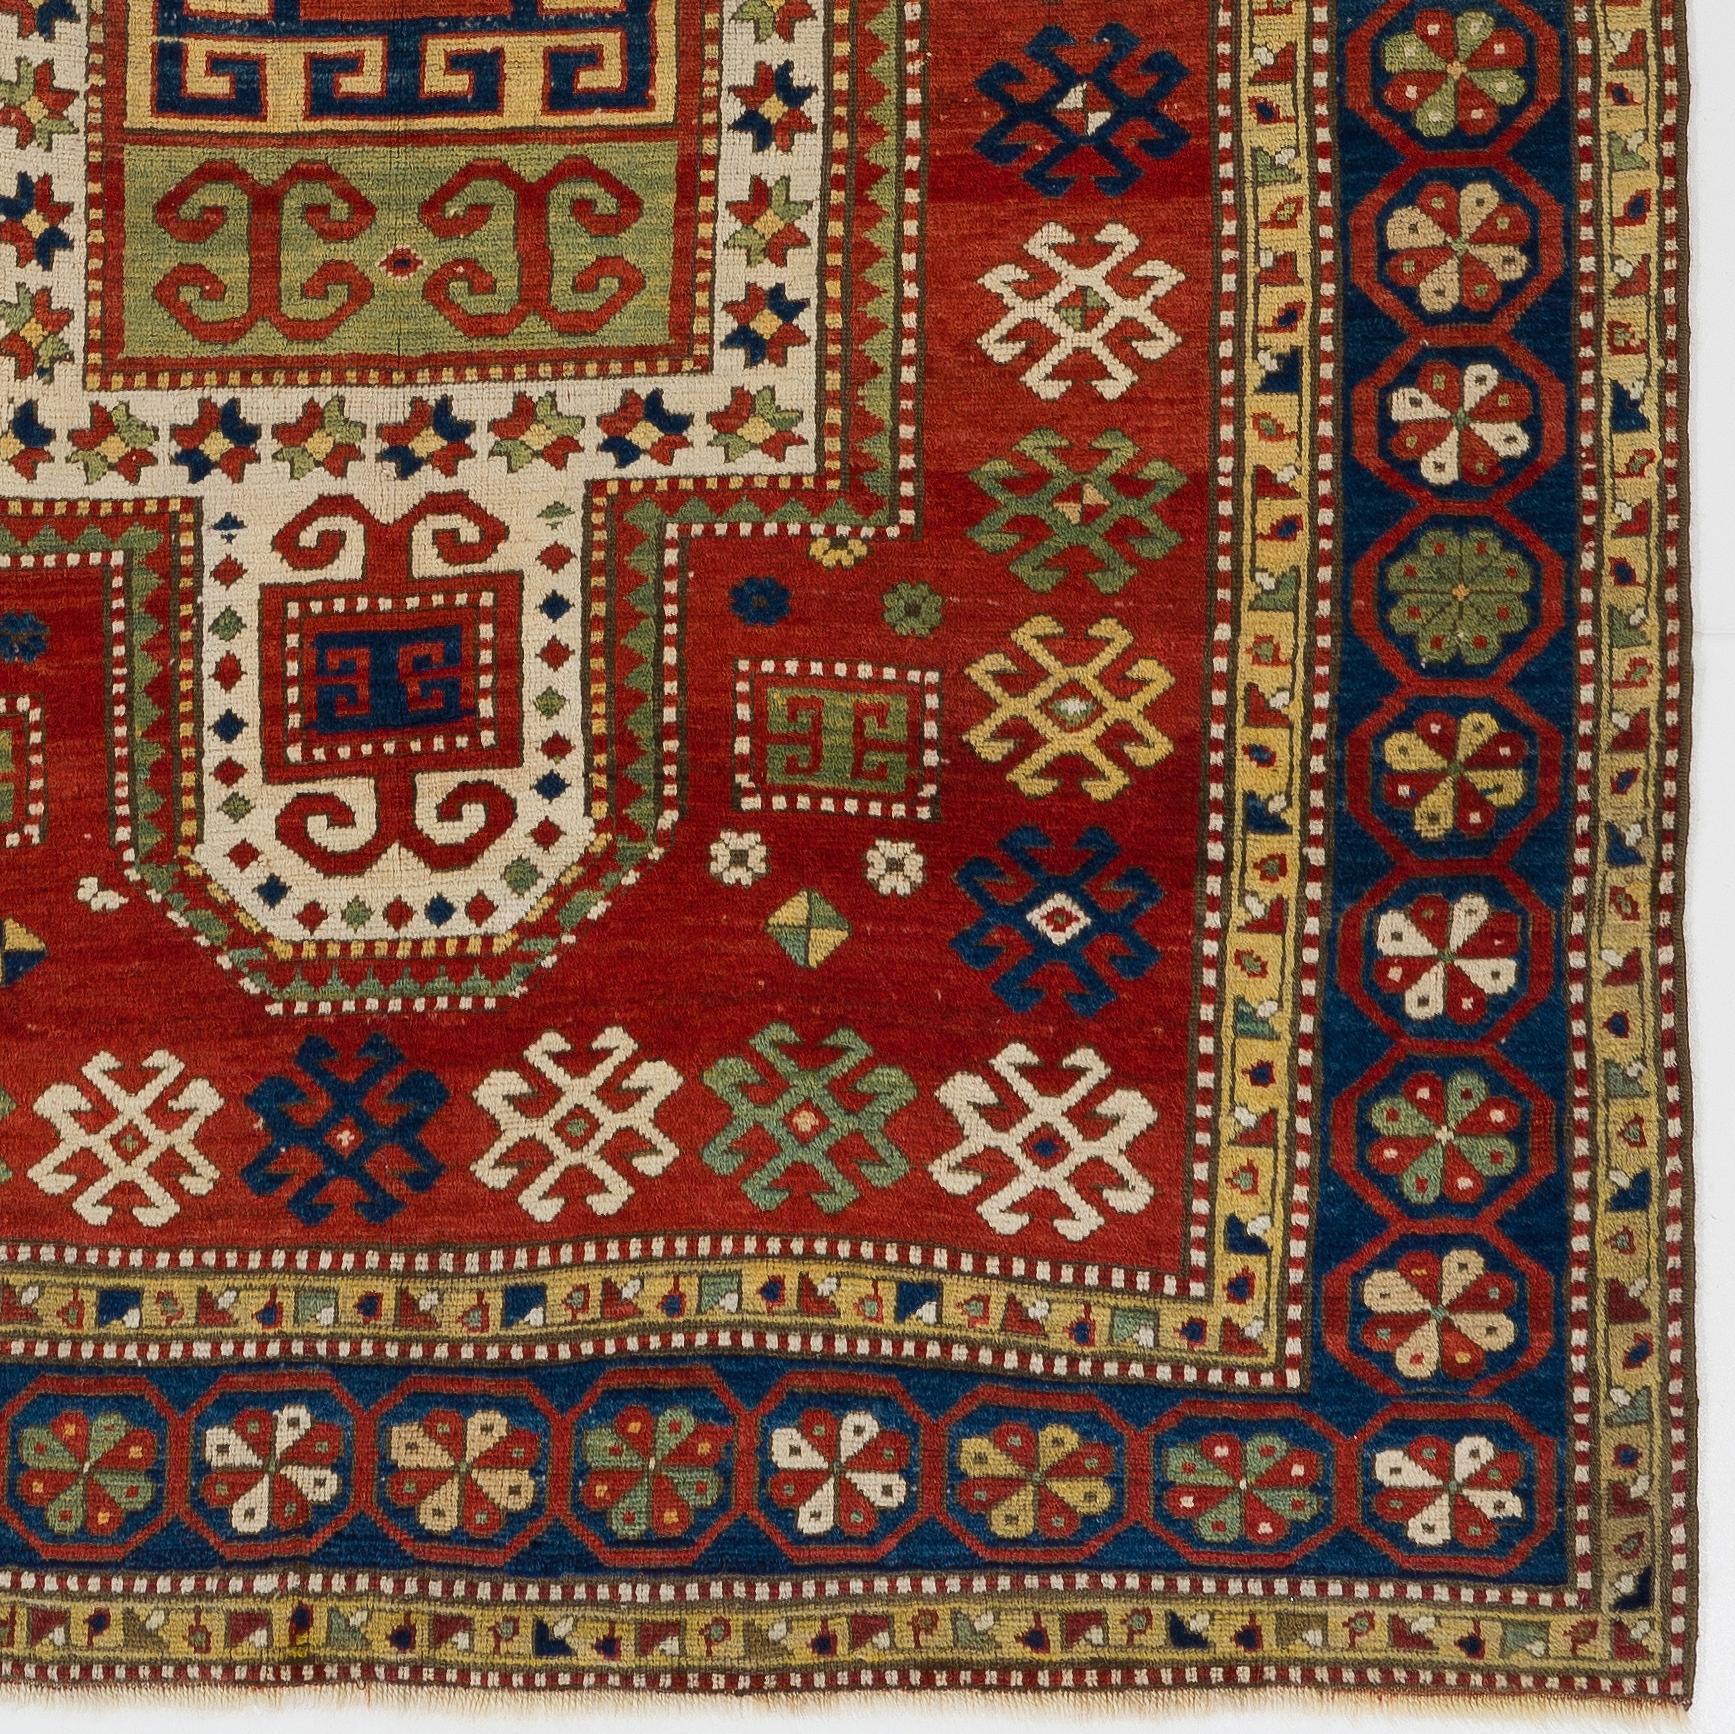 5'2'' x 8' Antiker kaukasischer Sewan-Kaukasischer Teppich, datiert 1890 (Handgeknüpft) im Angebot